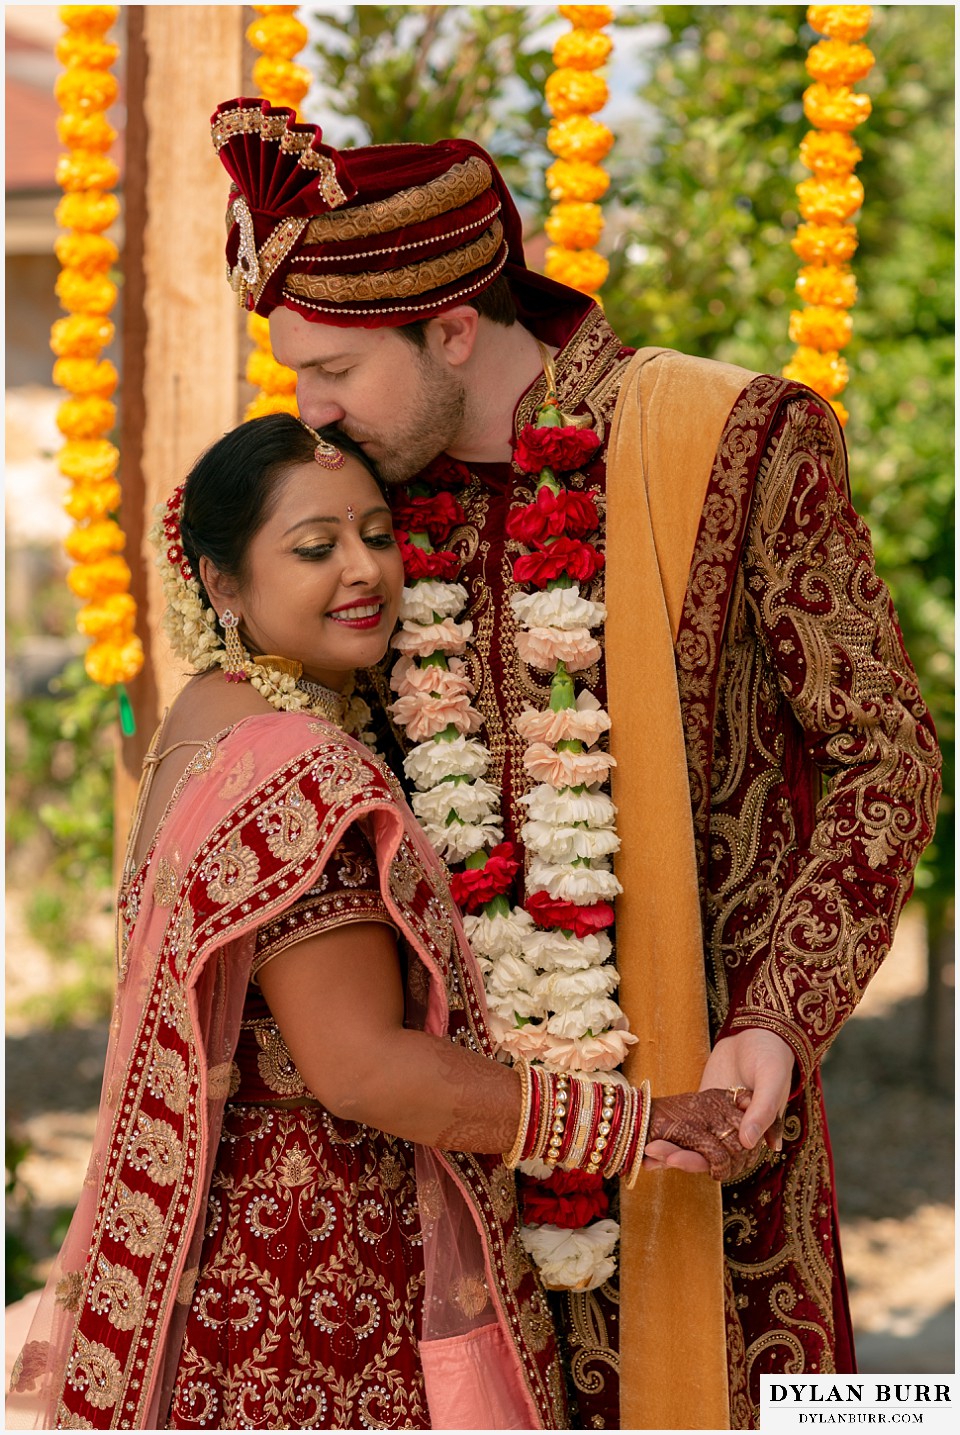 baldoria on the water wedding lakewood colorado hindu wedding indian bride and groom together